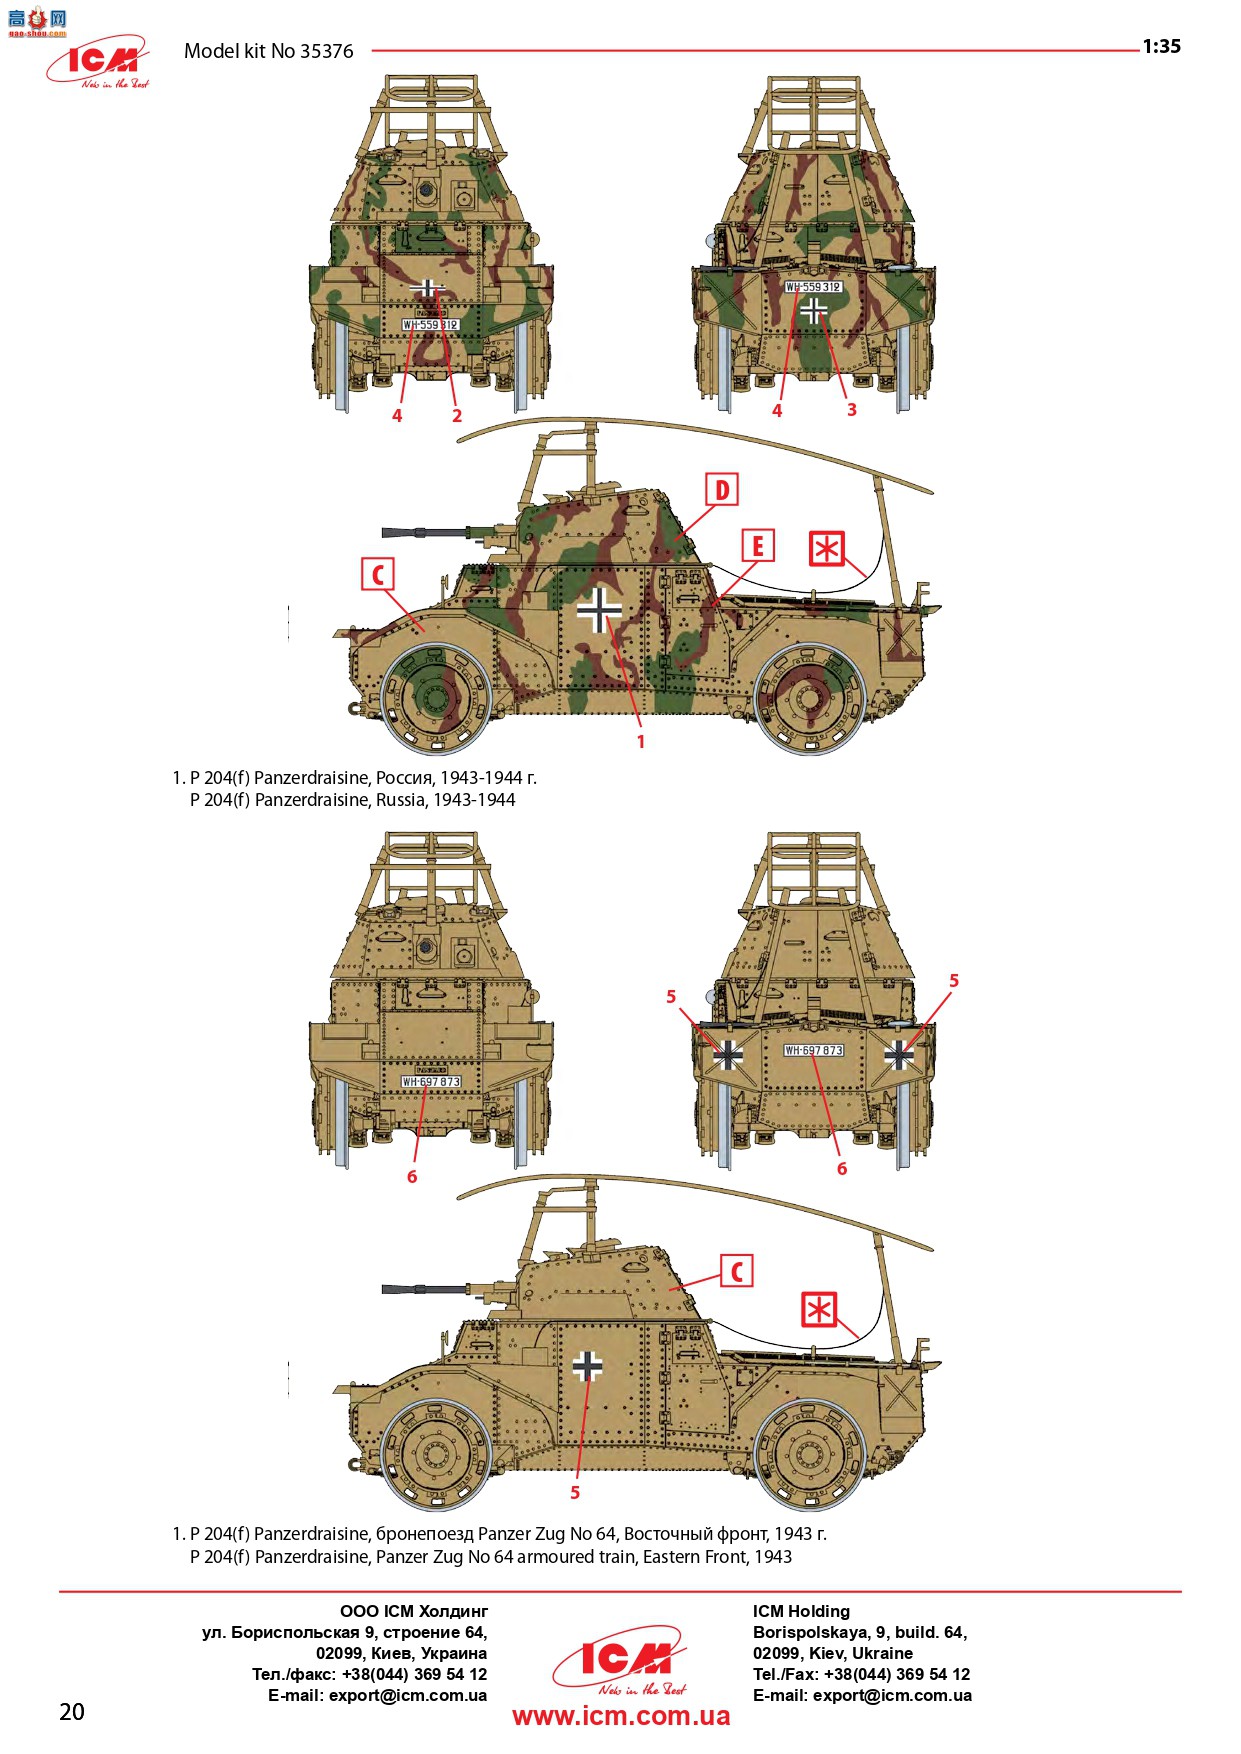 ICM װ׳ 35376 Panzersp&amp;#228;hwagenP 204(f)· ս¹װ׳